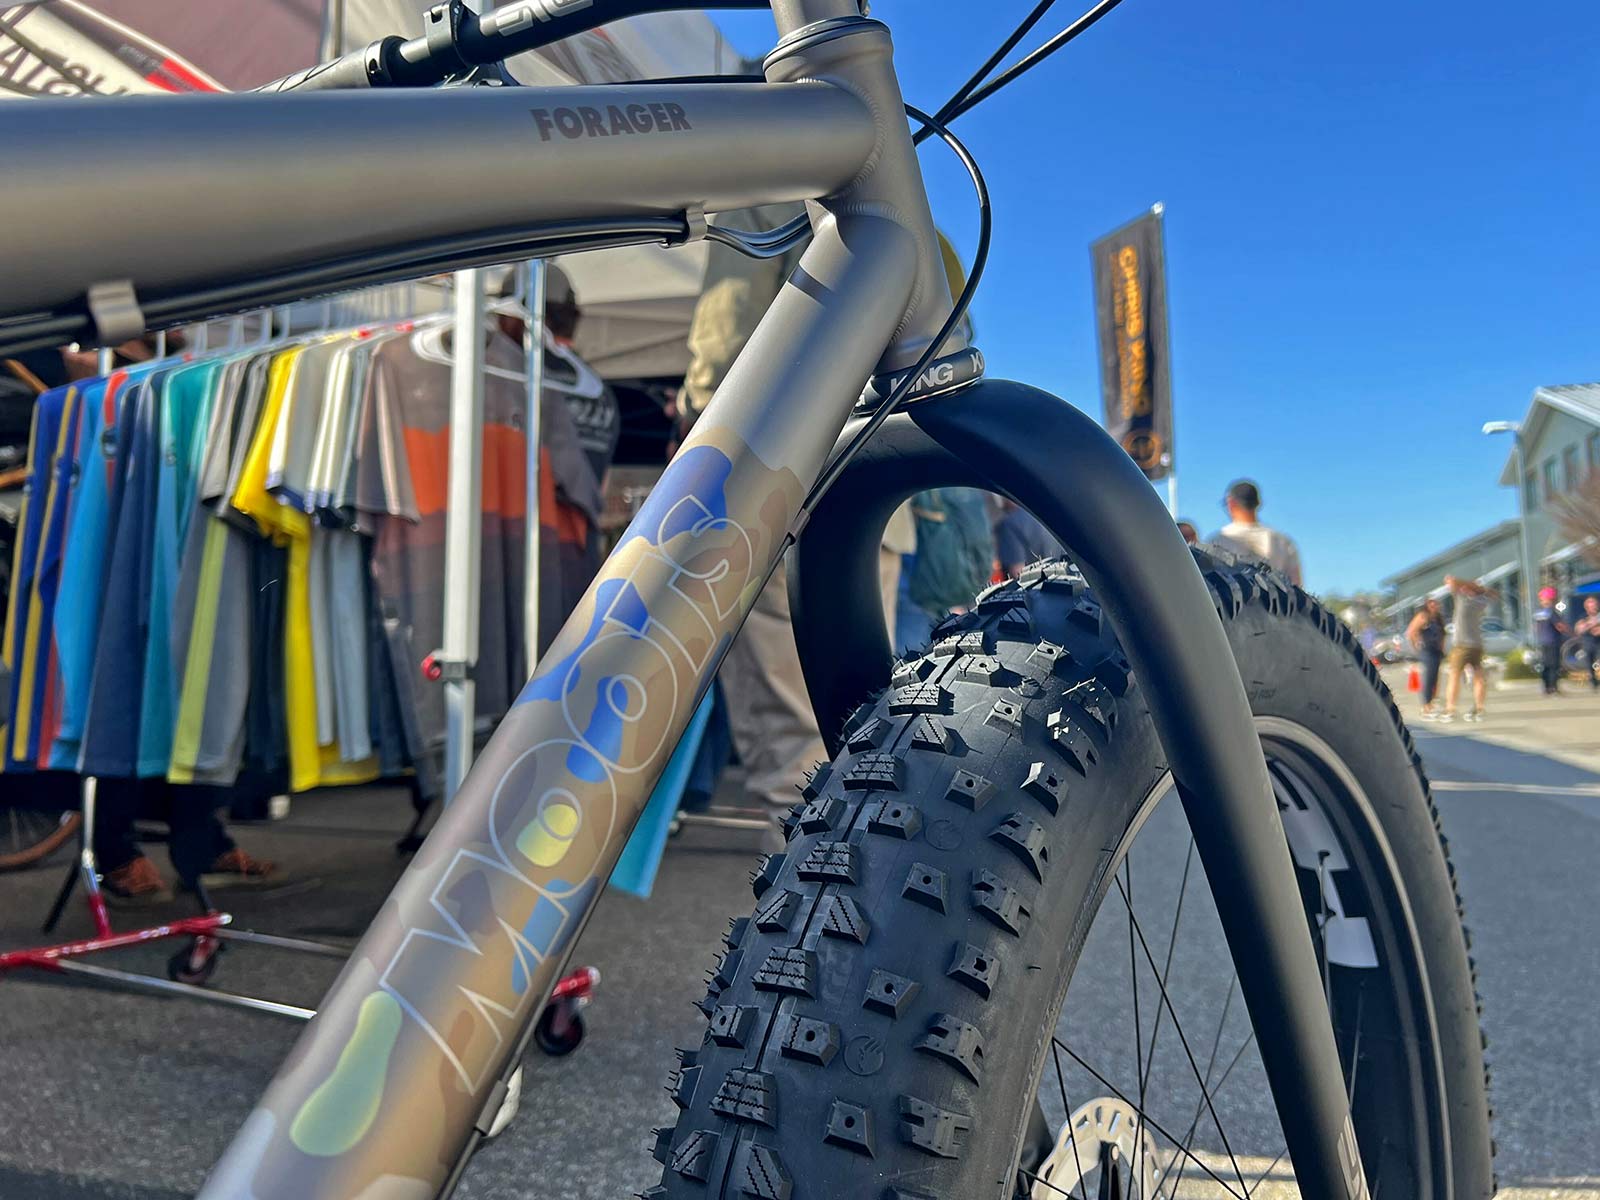 Moots Forager titanium fat bike sneak peek, huge 27.5x4.5" tire snow bike, carbon ENVE fat fork